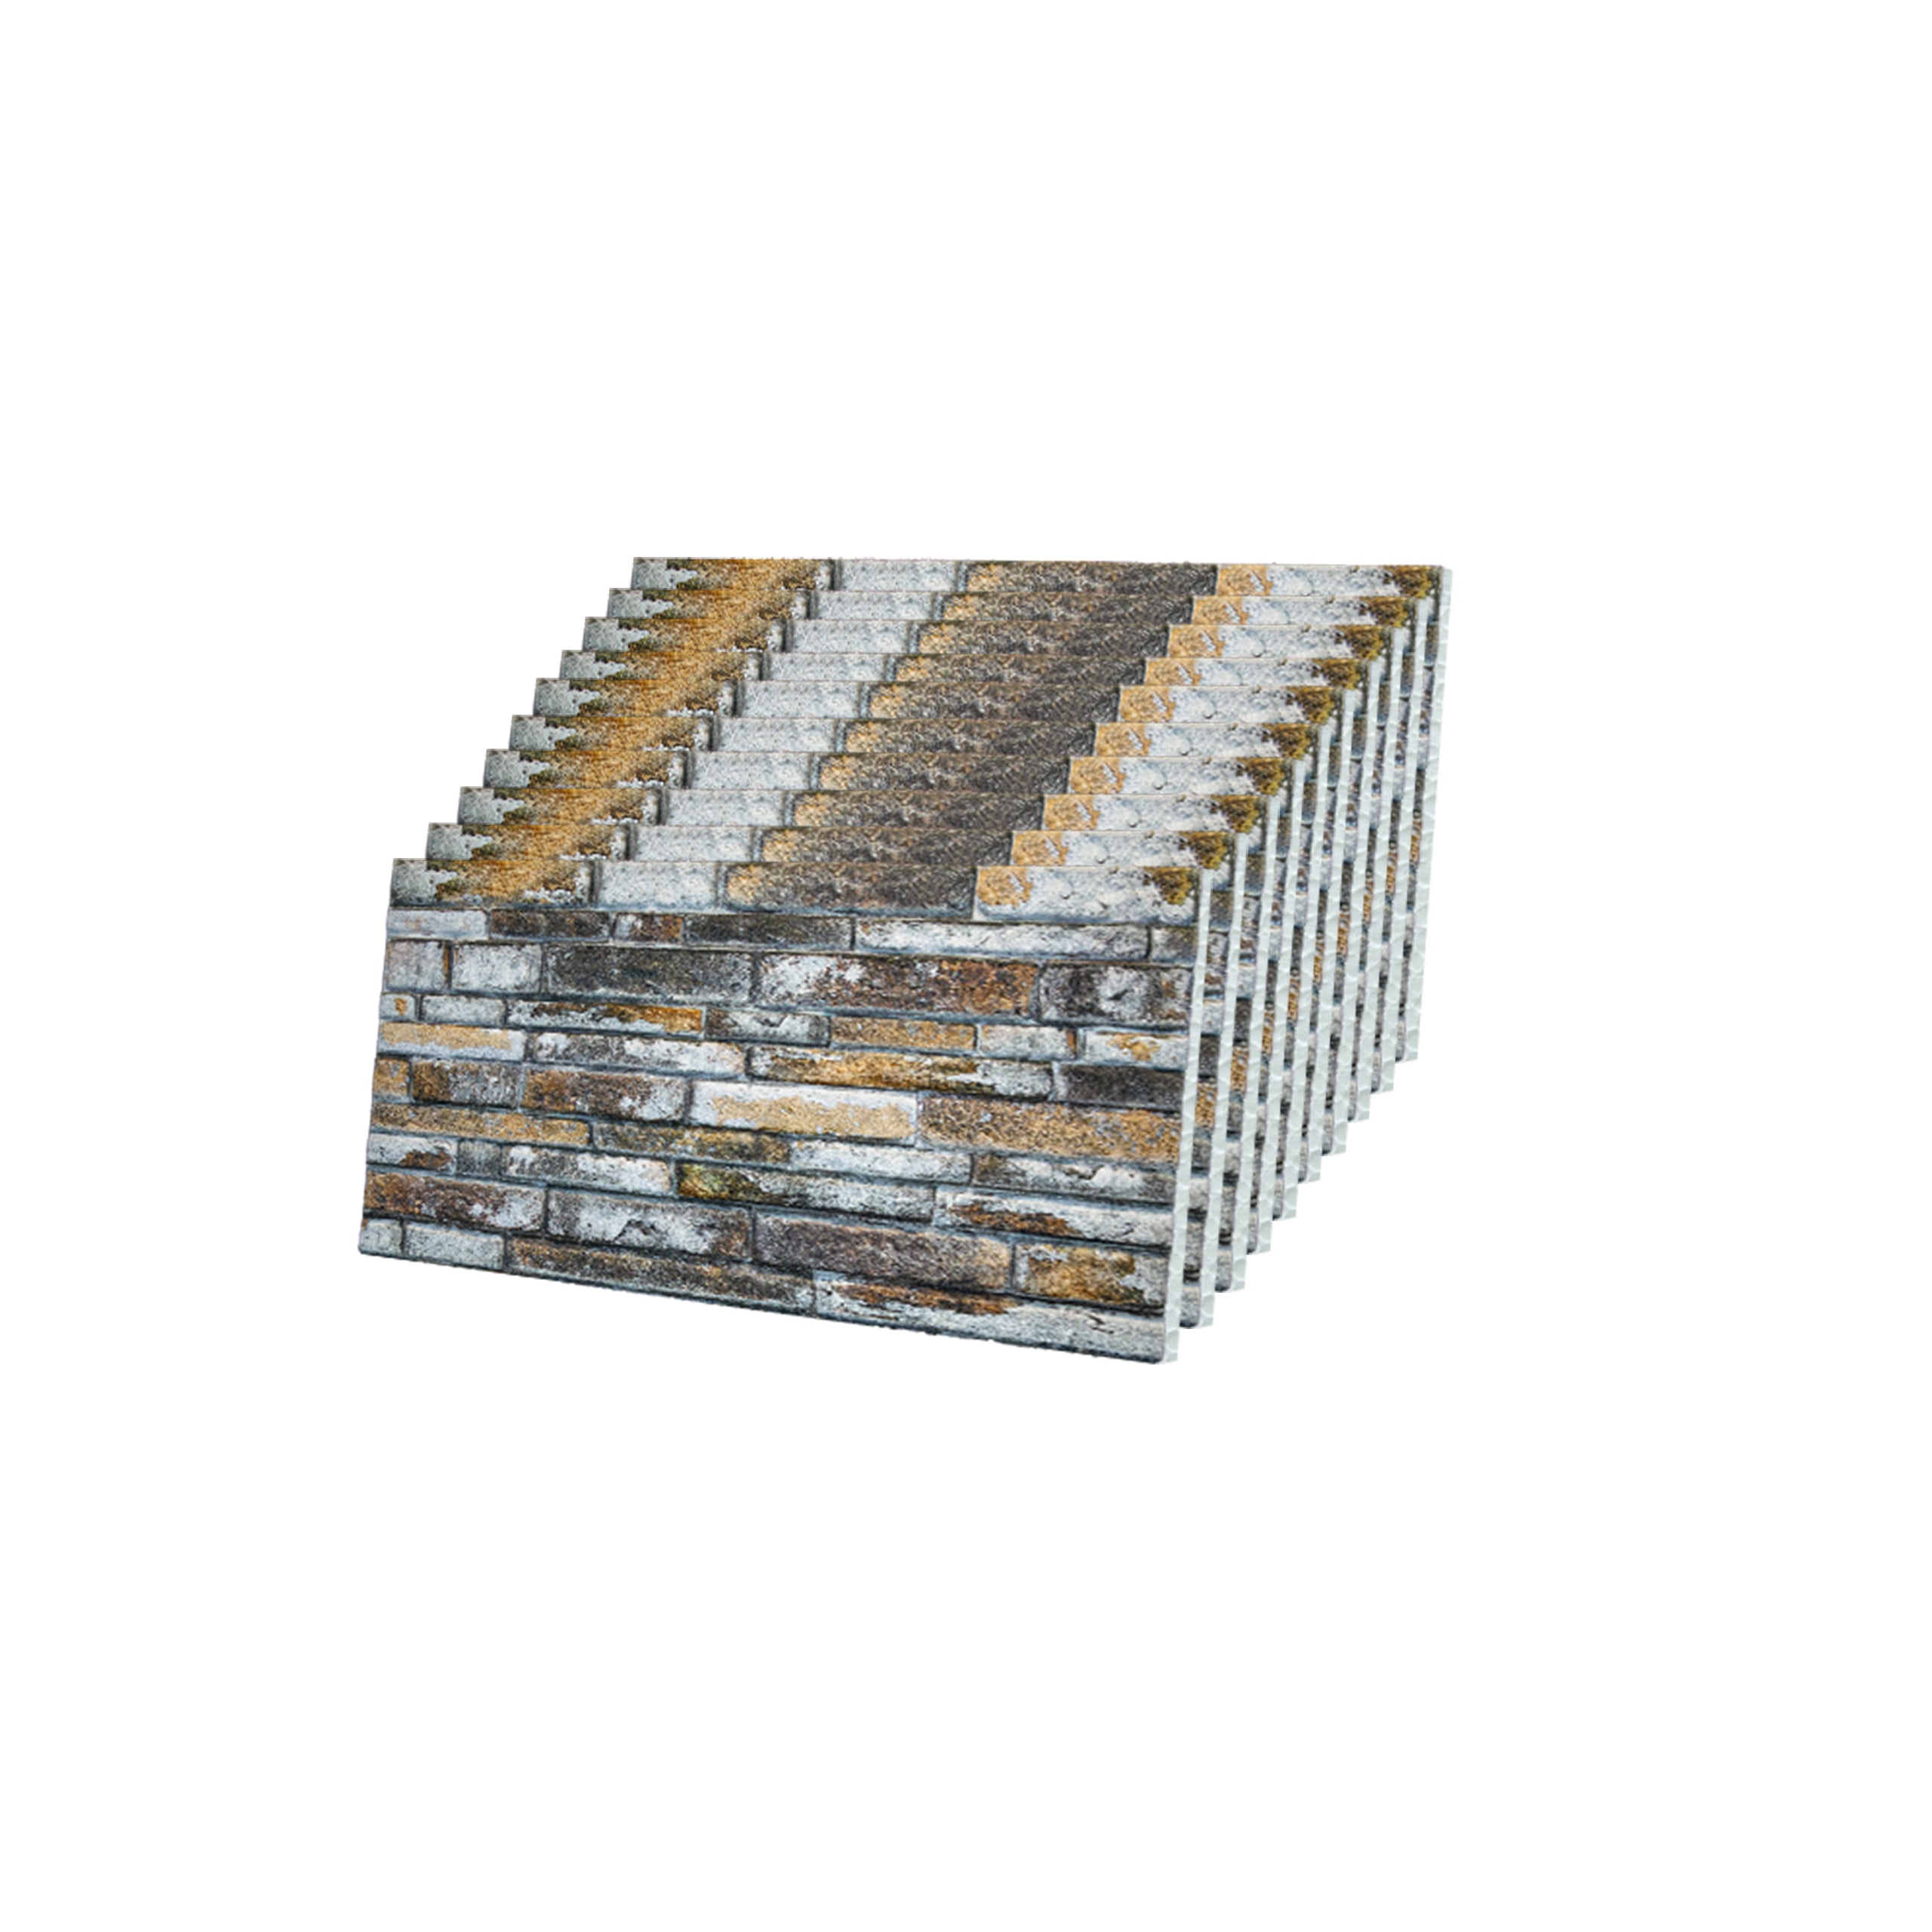 IZODEKOR Mountain Touch N-08 3D Bricks Effect Wall Panels